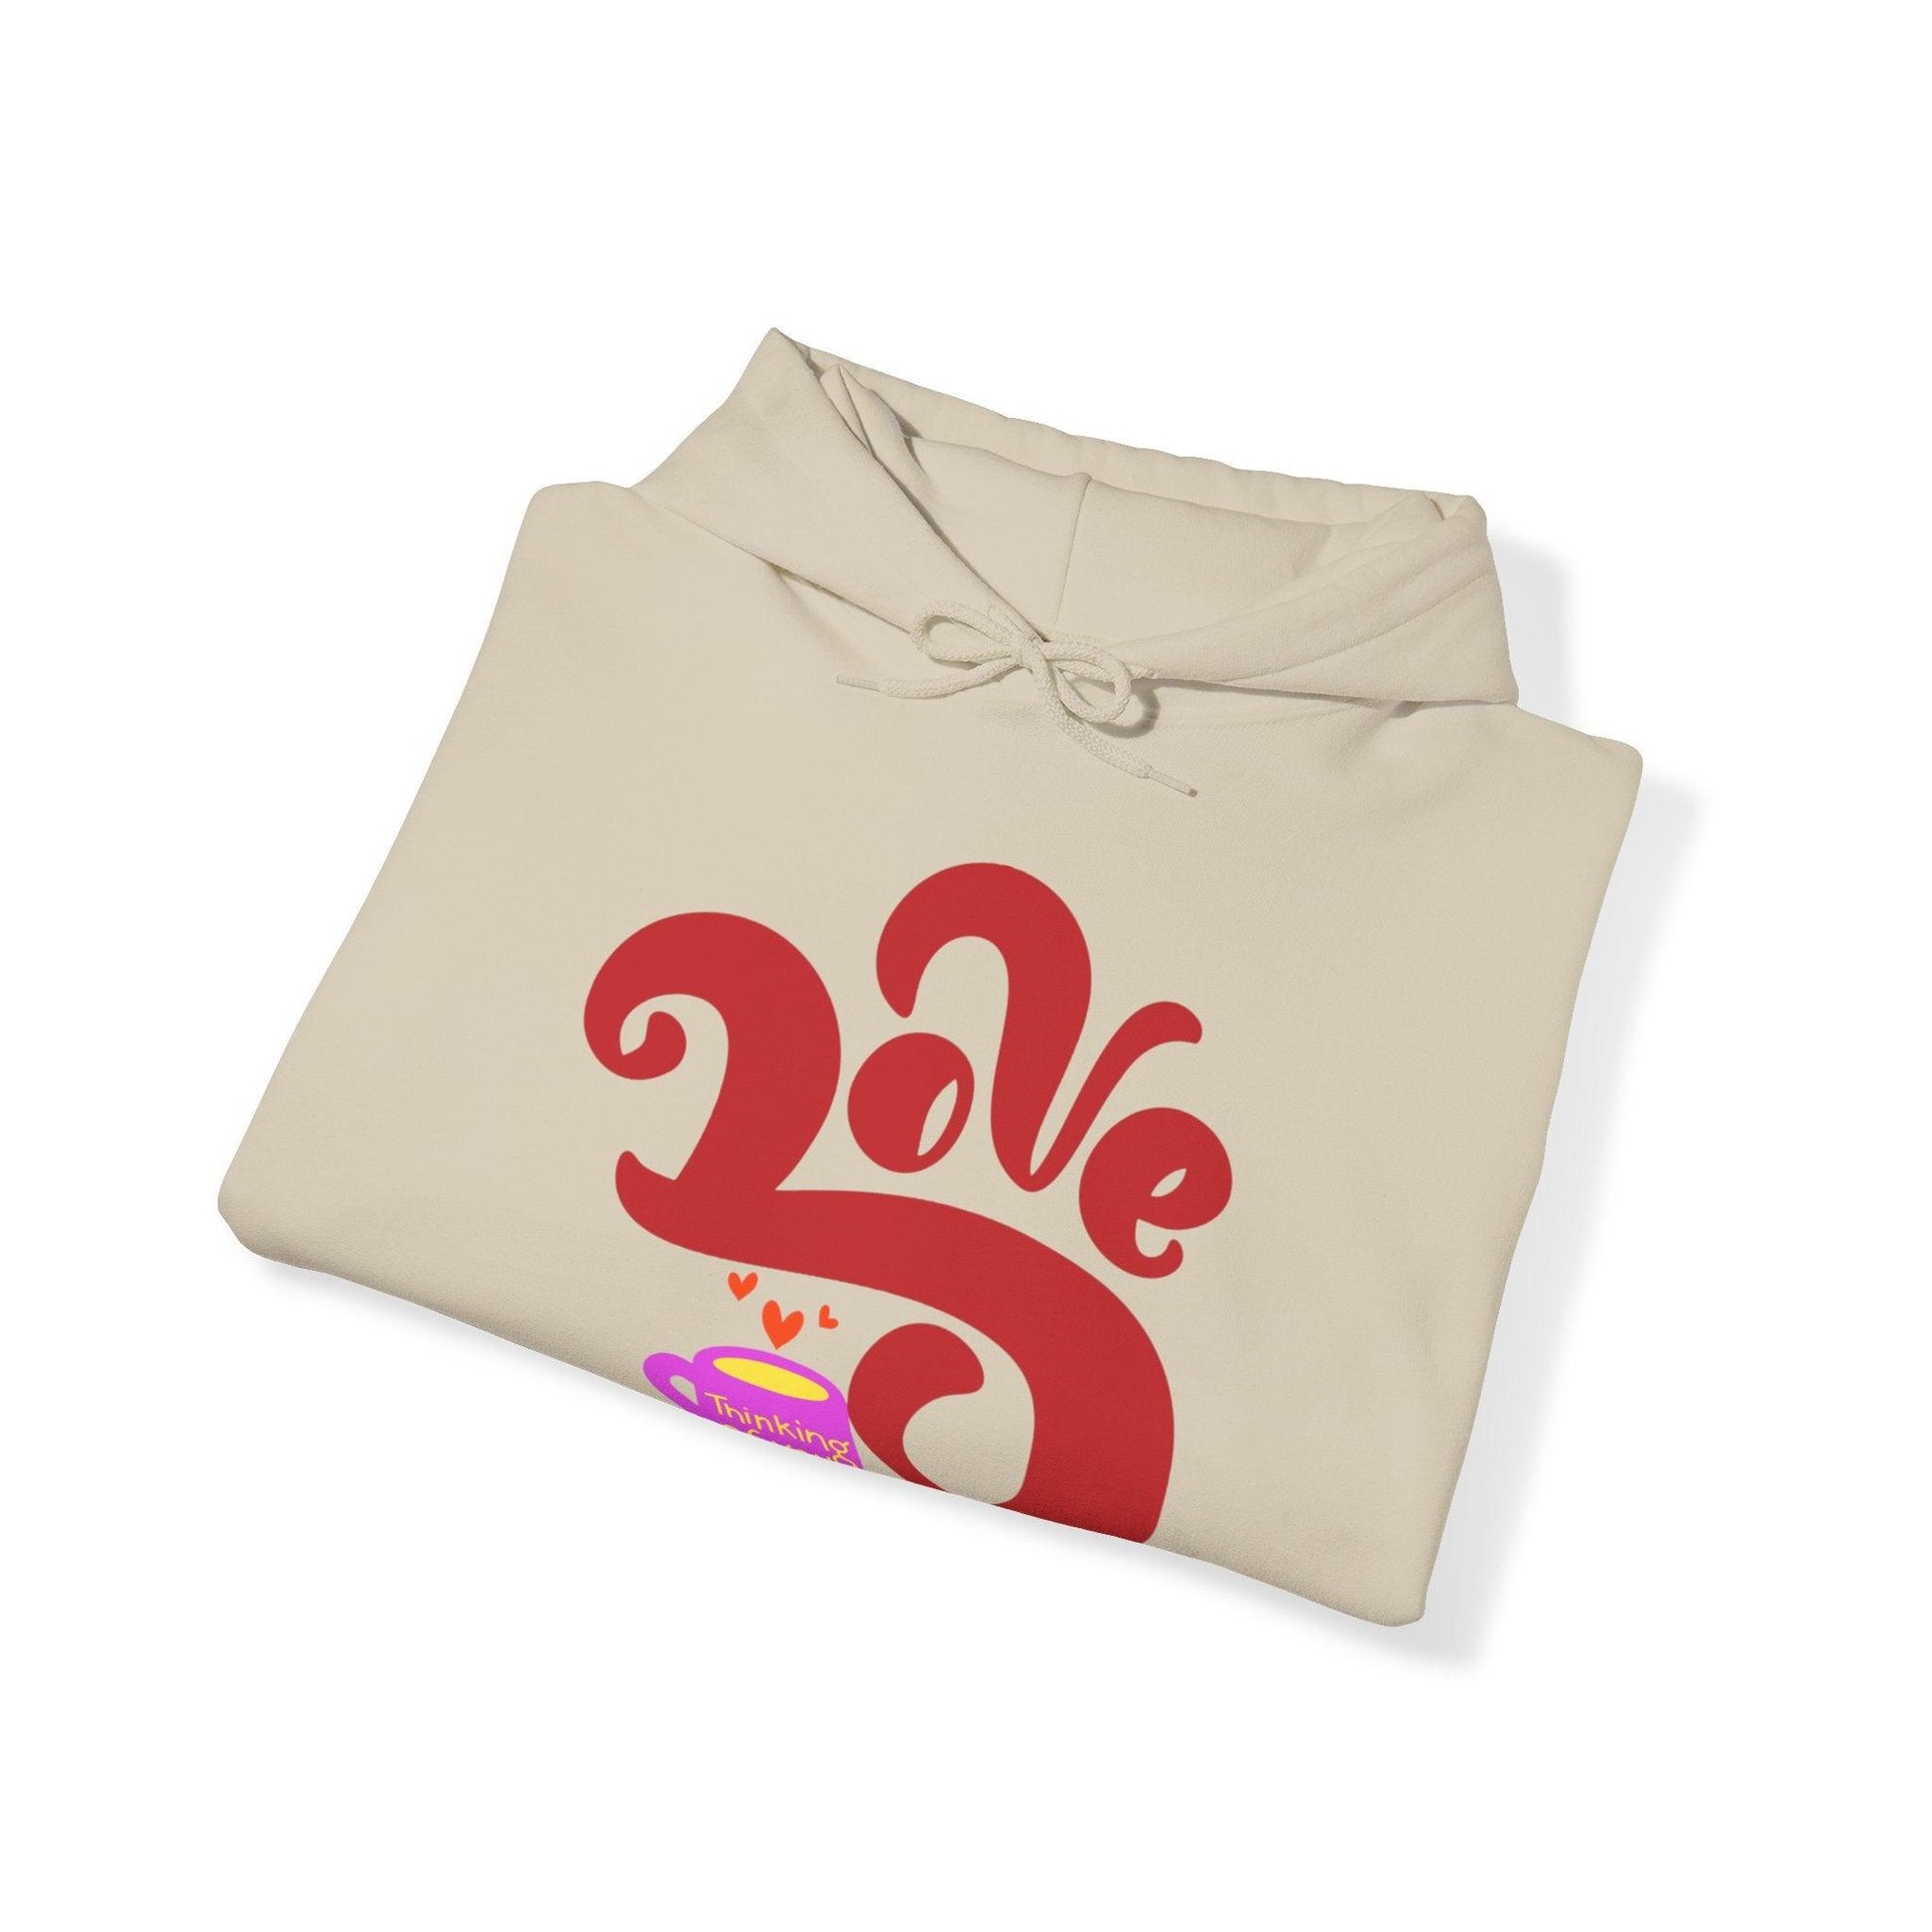 Valentines Love Hooded Sweatshirt - COFFEEBRE